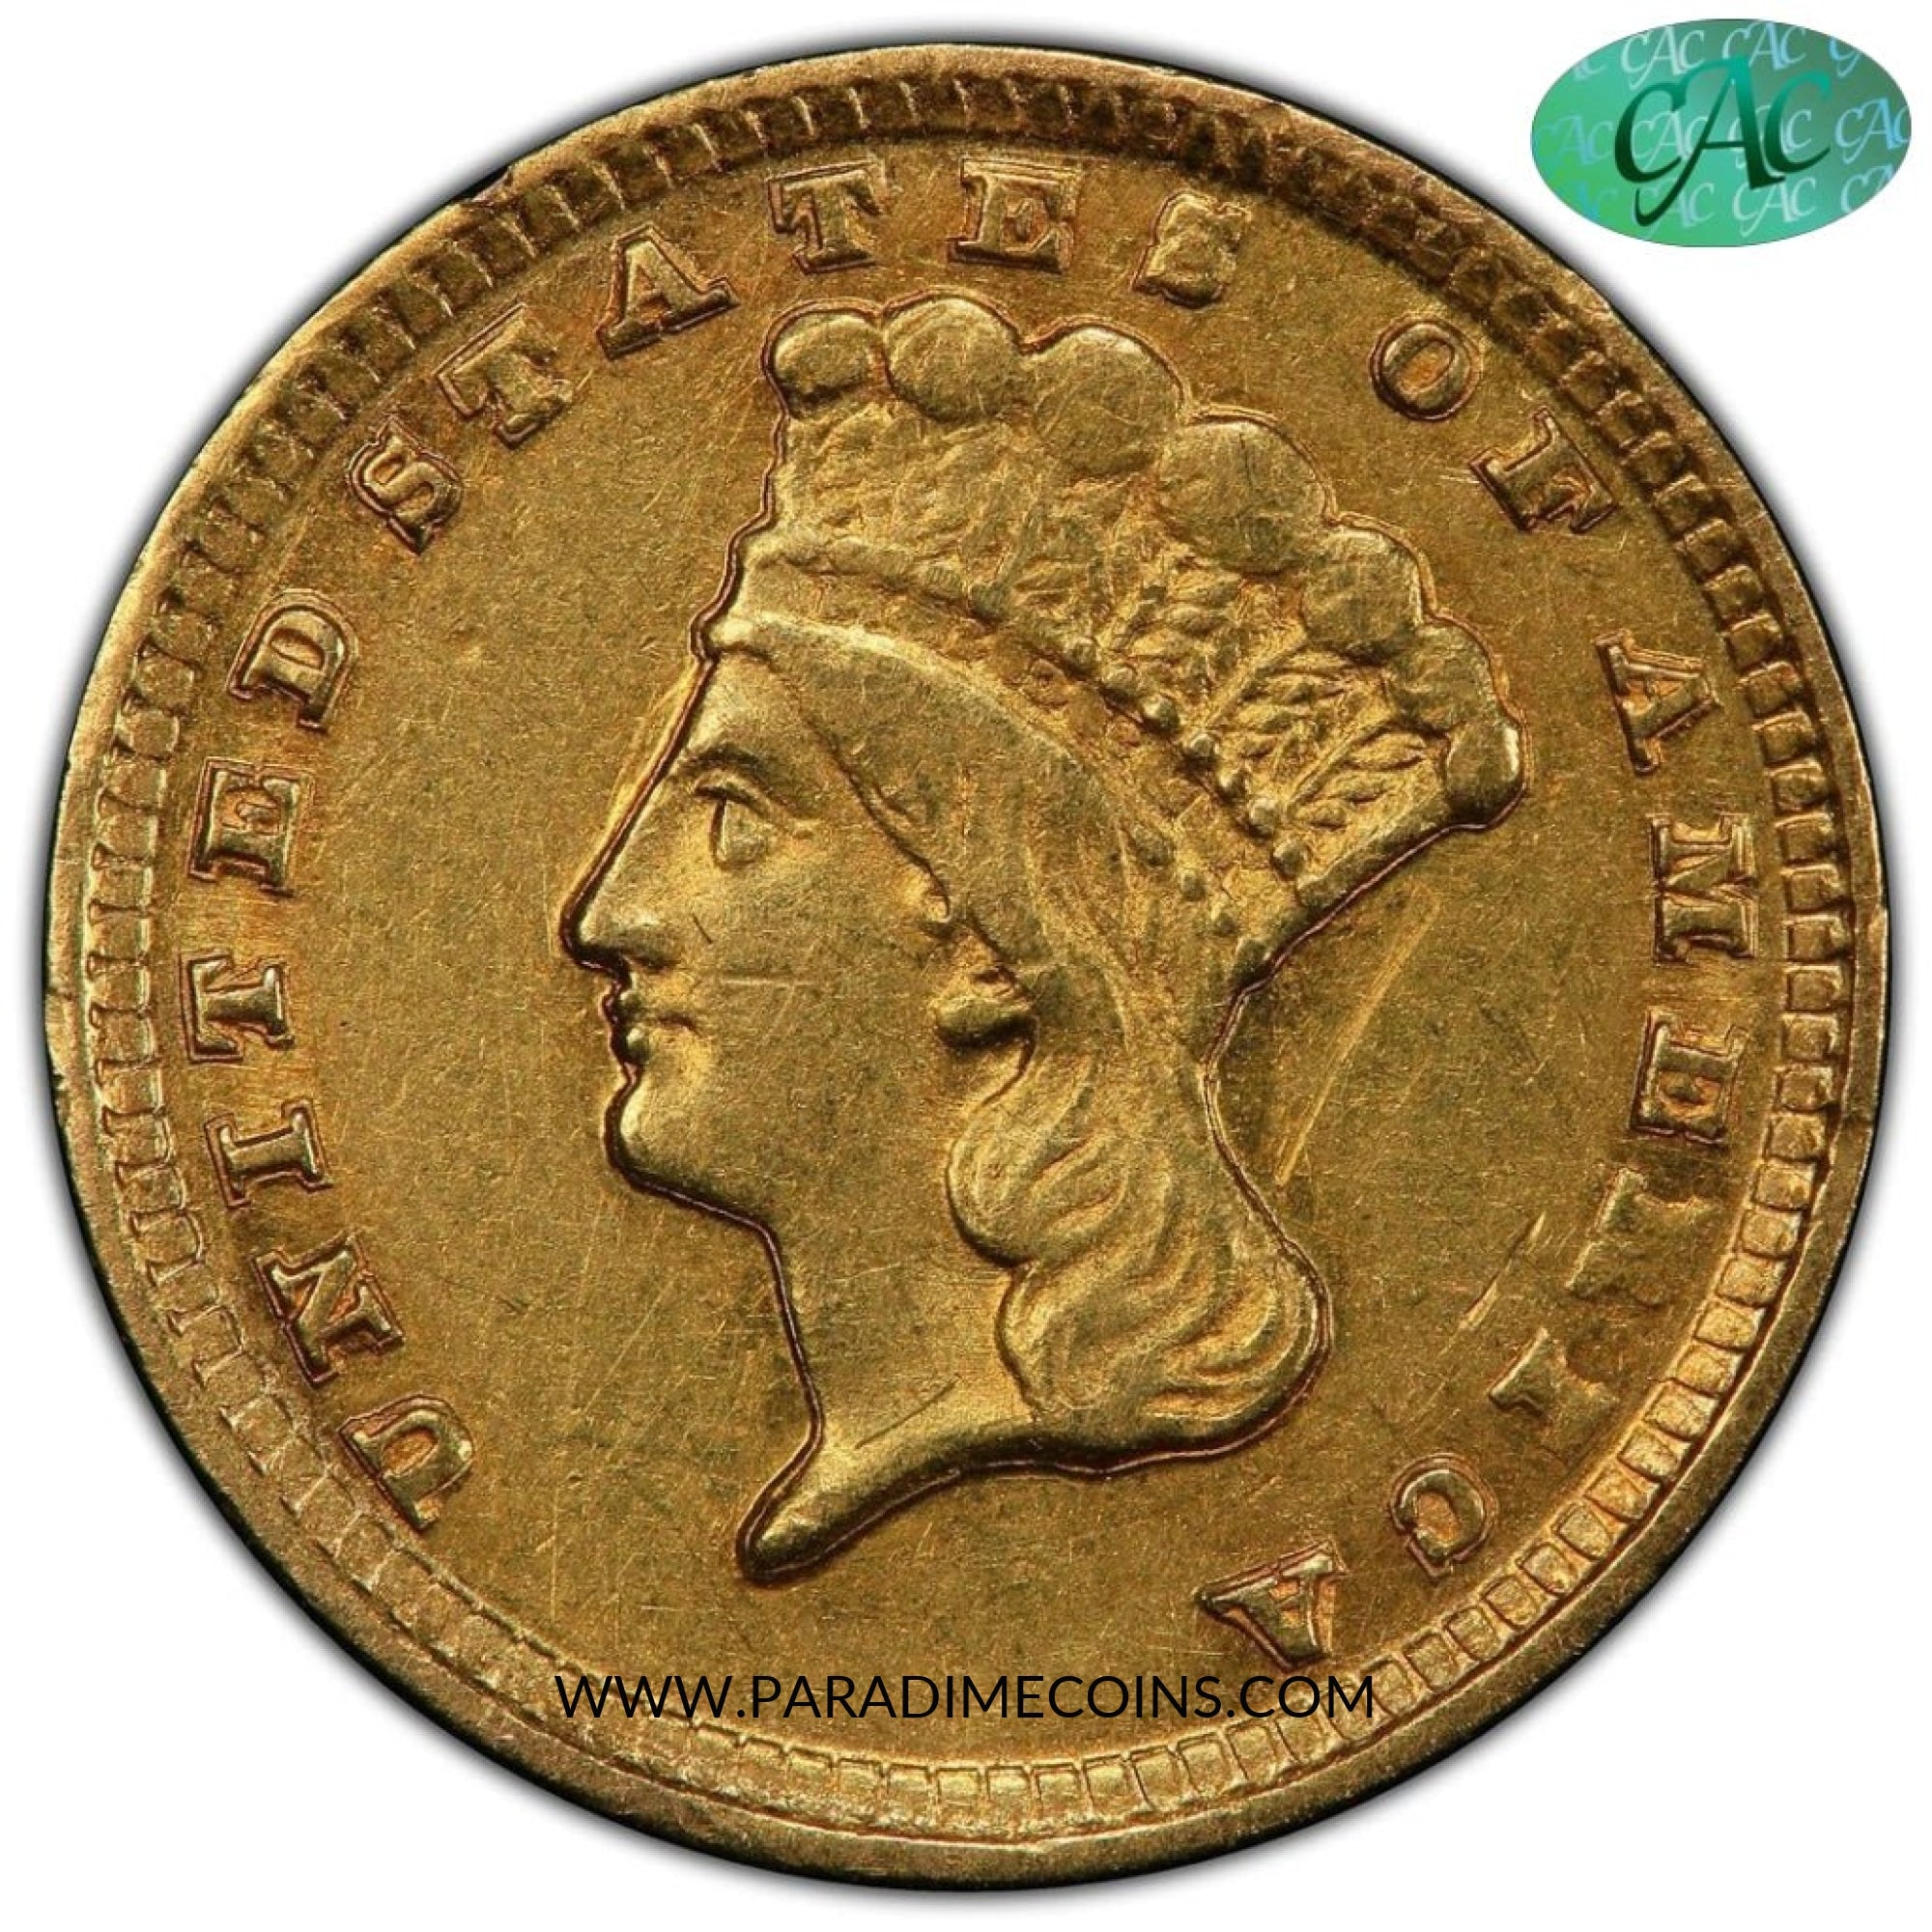 1858-D G$1 AU53 PCGS CAC - Paradime Coins | PCGS NGC CACG CAC Rare US Numismatic Coins For Sale